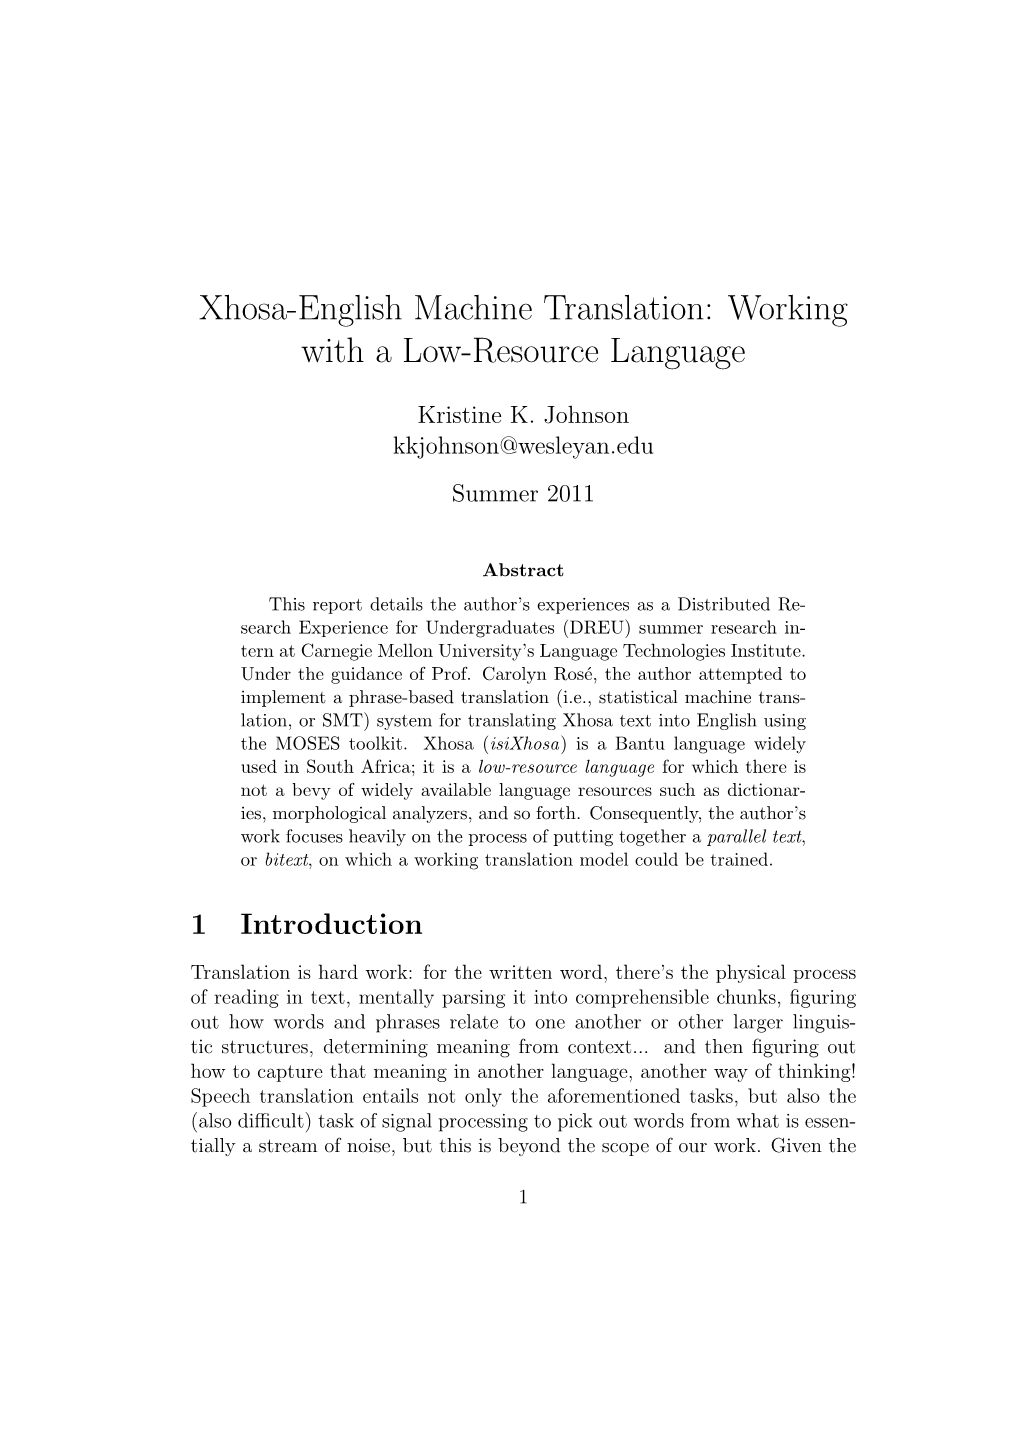 Xhosa-English Machine Translation: Working with a Low-Resource Language